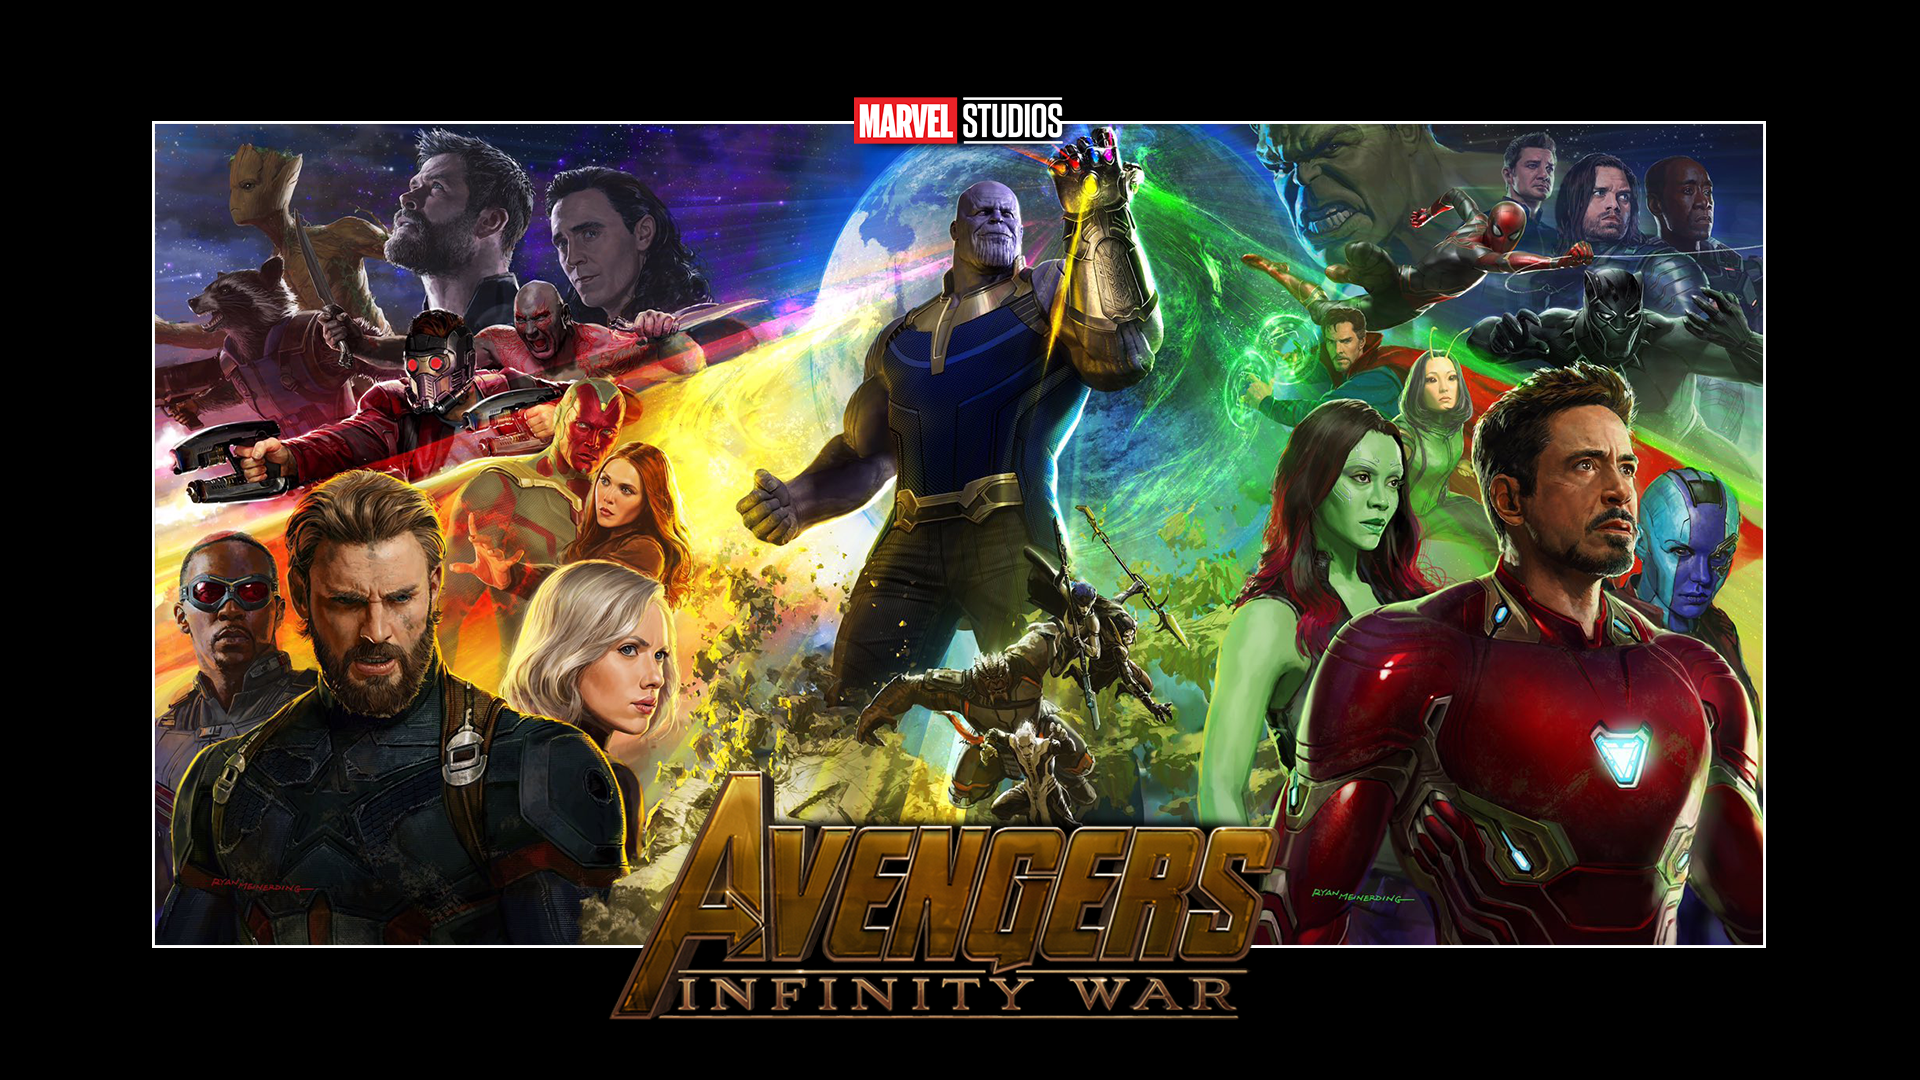 Avengers: Infinity War Picture by Ryan Meinerding